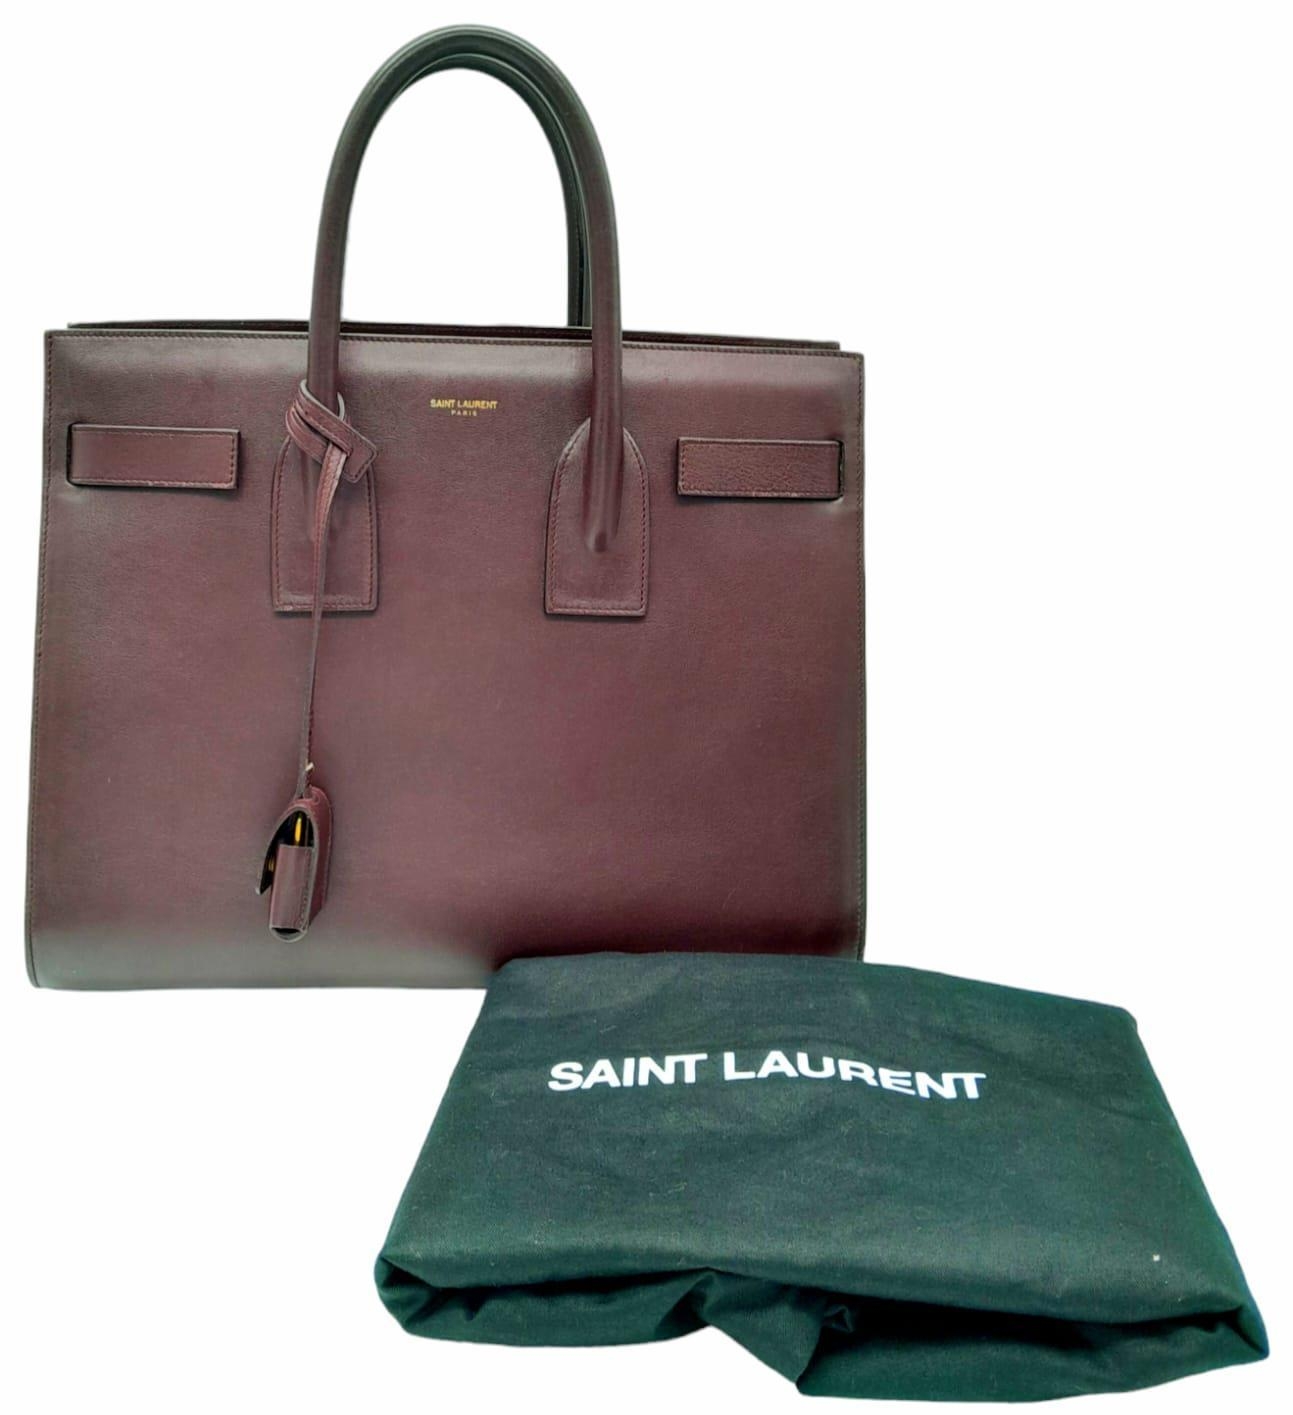 A Saint Laurent Sac De Jour Burgundy Handbag. Leather Exterior, Gold Tone Hardware, Double Handle in - Image 6 of 9